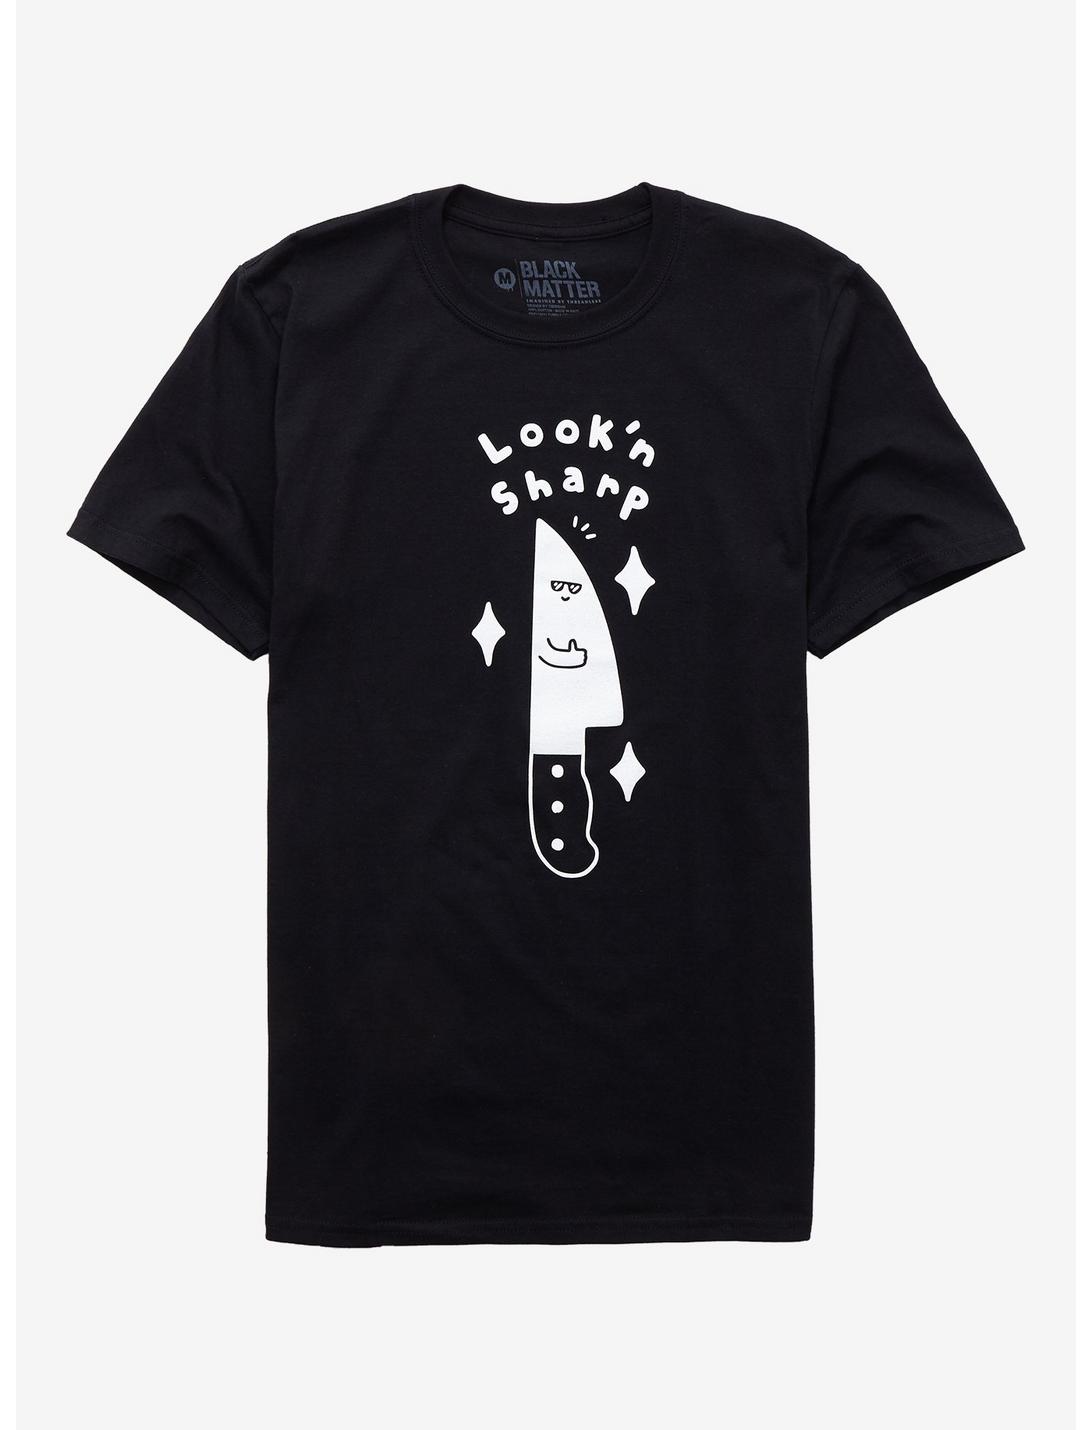 Look'n Sharp T-Shirt By Obinsun, WHITE, hi-res